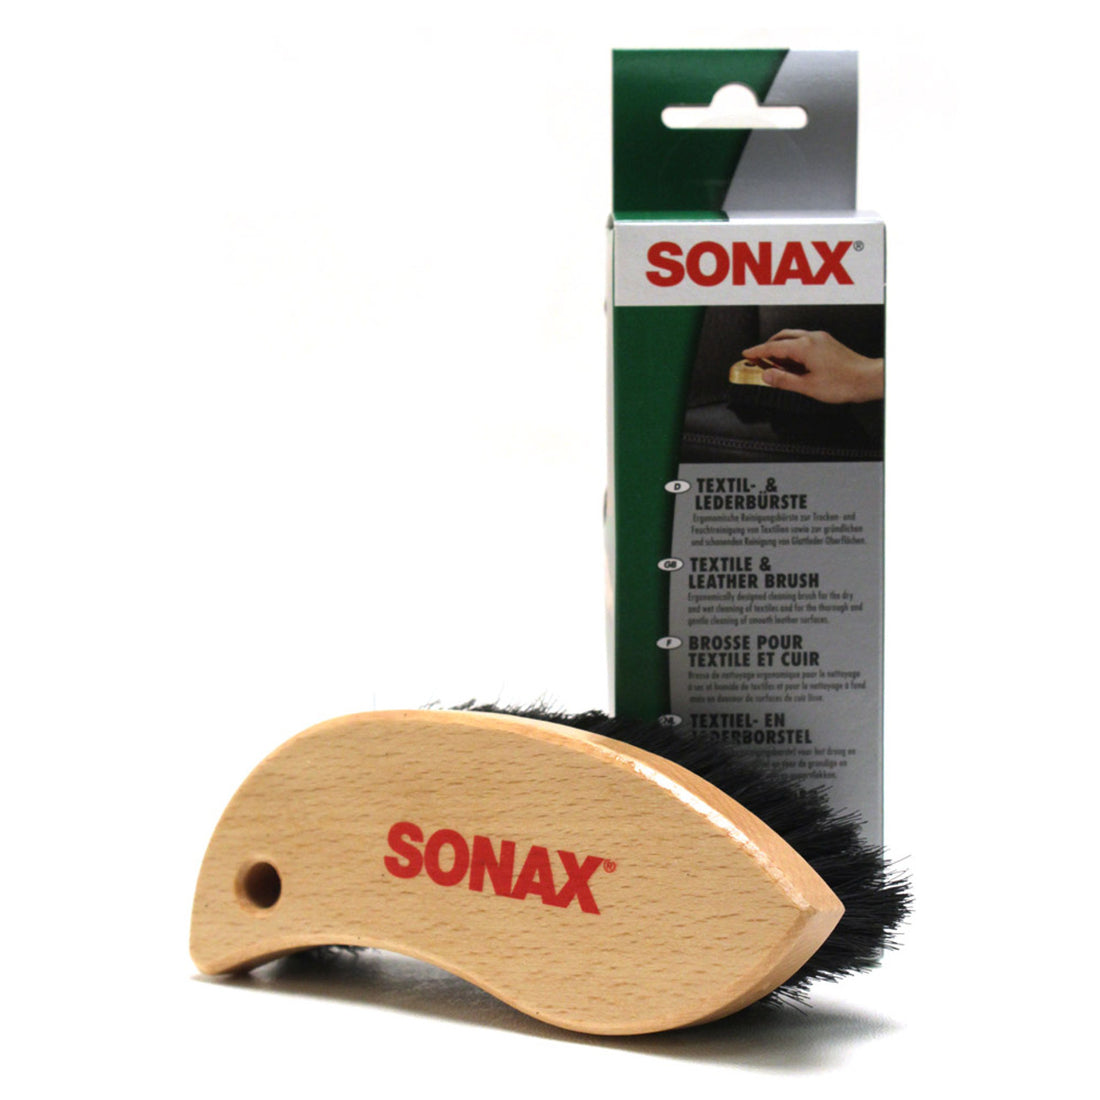 SONAX Textile & Leather Brush 1pc